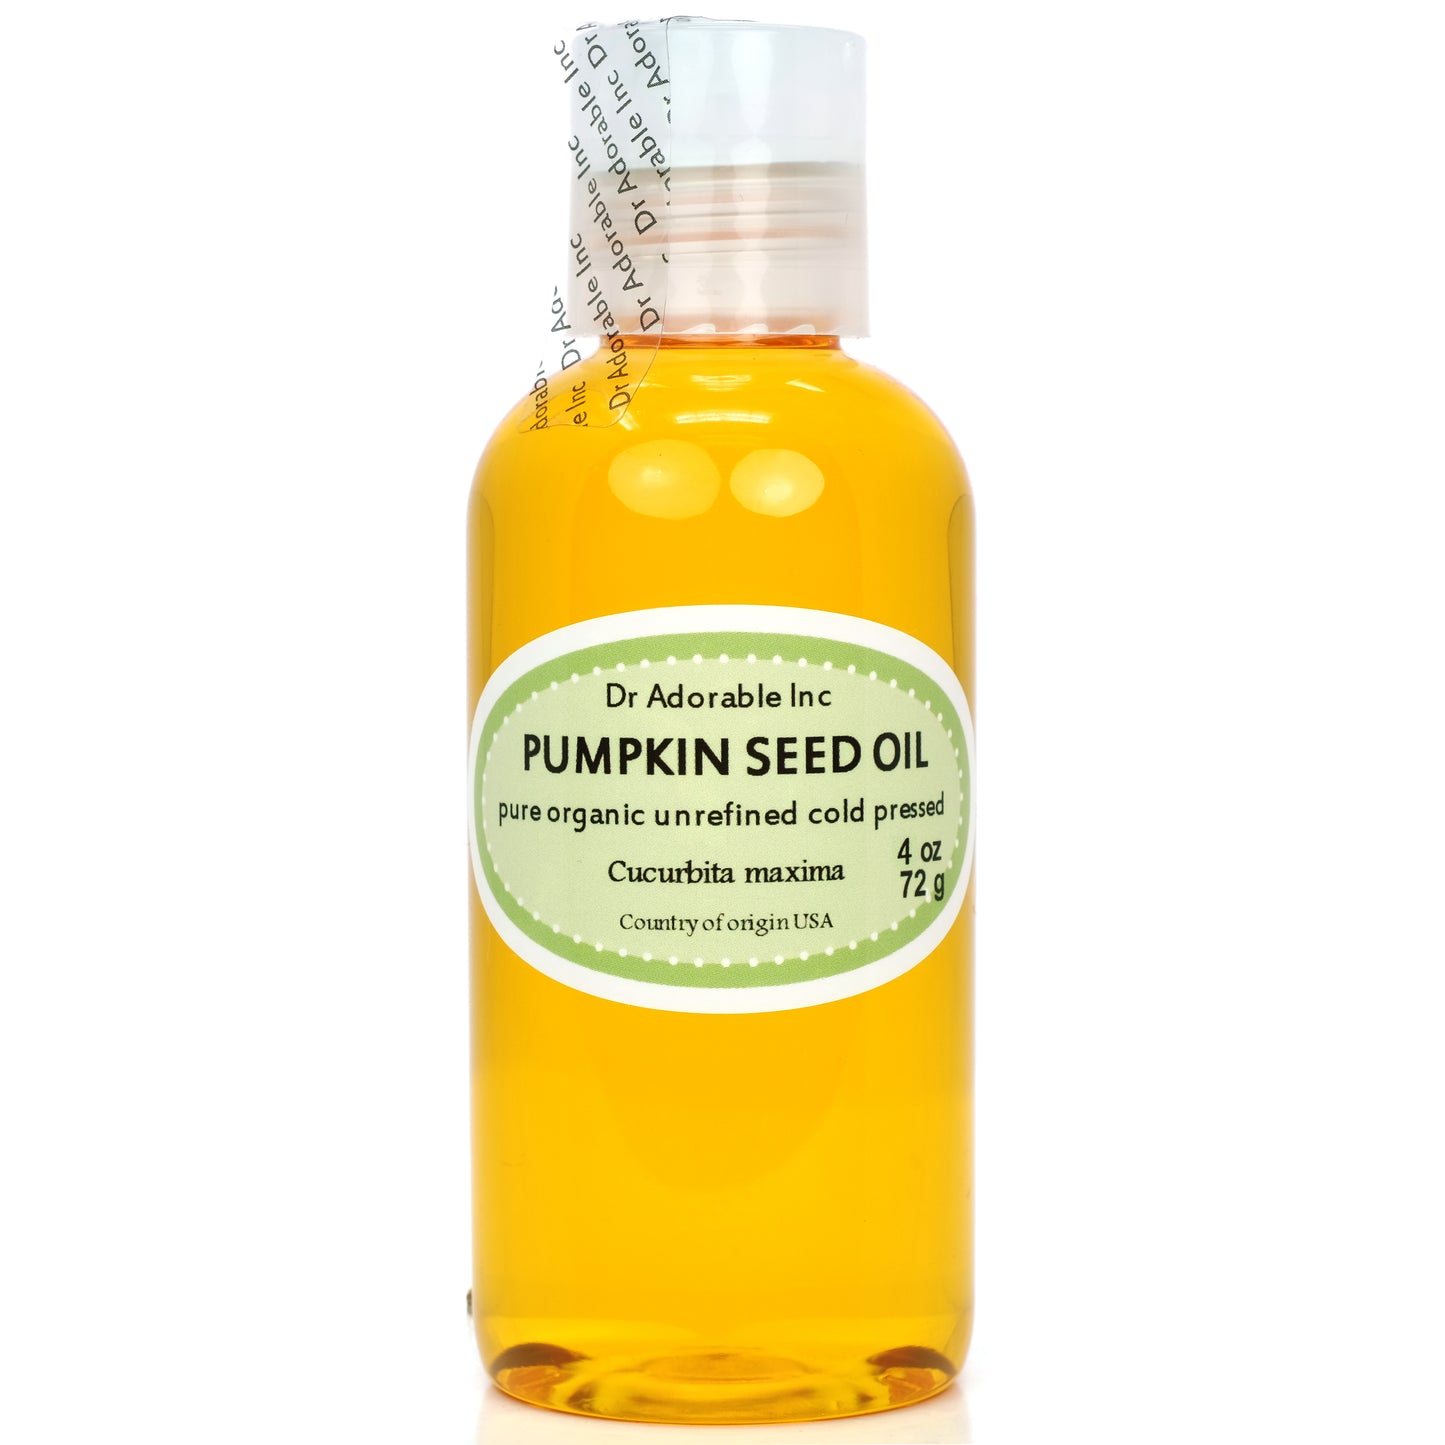 Pumpkin Seed Oil Unrefined - Virgin 100% Pure Natural Premium Organic Cold Pressed